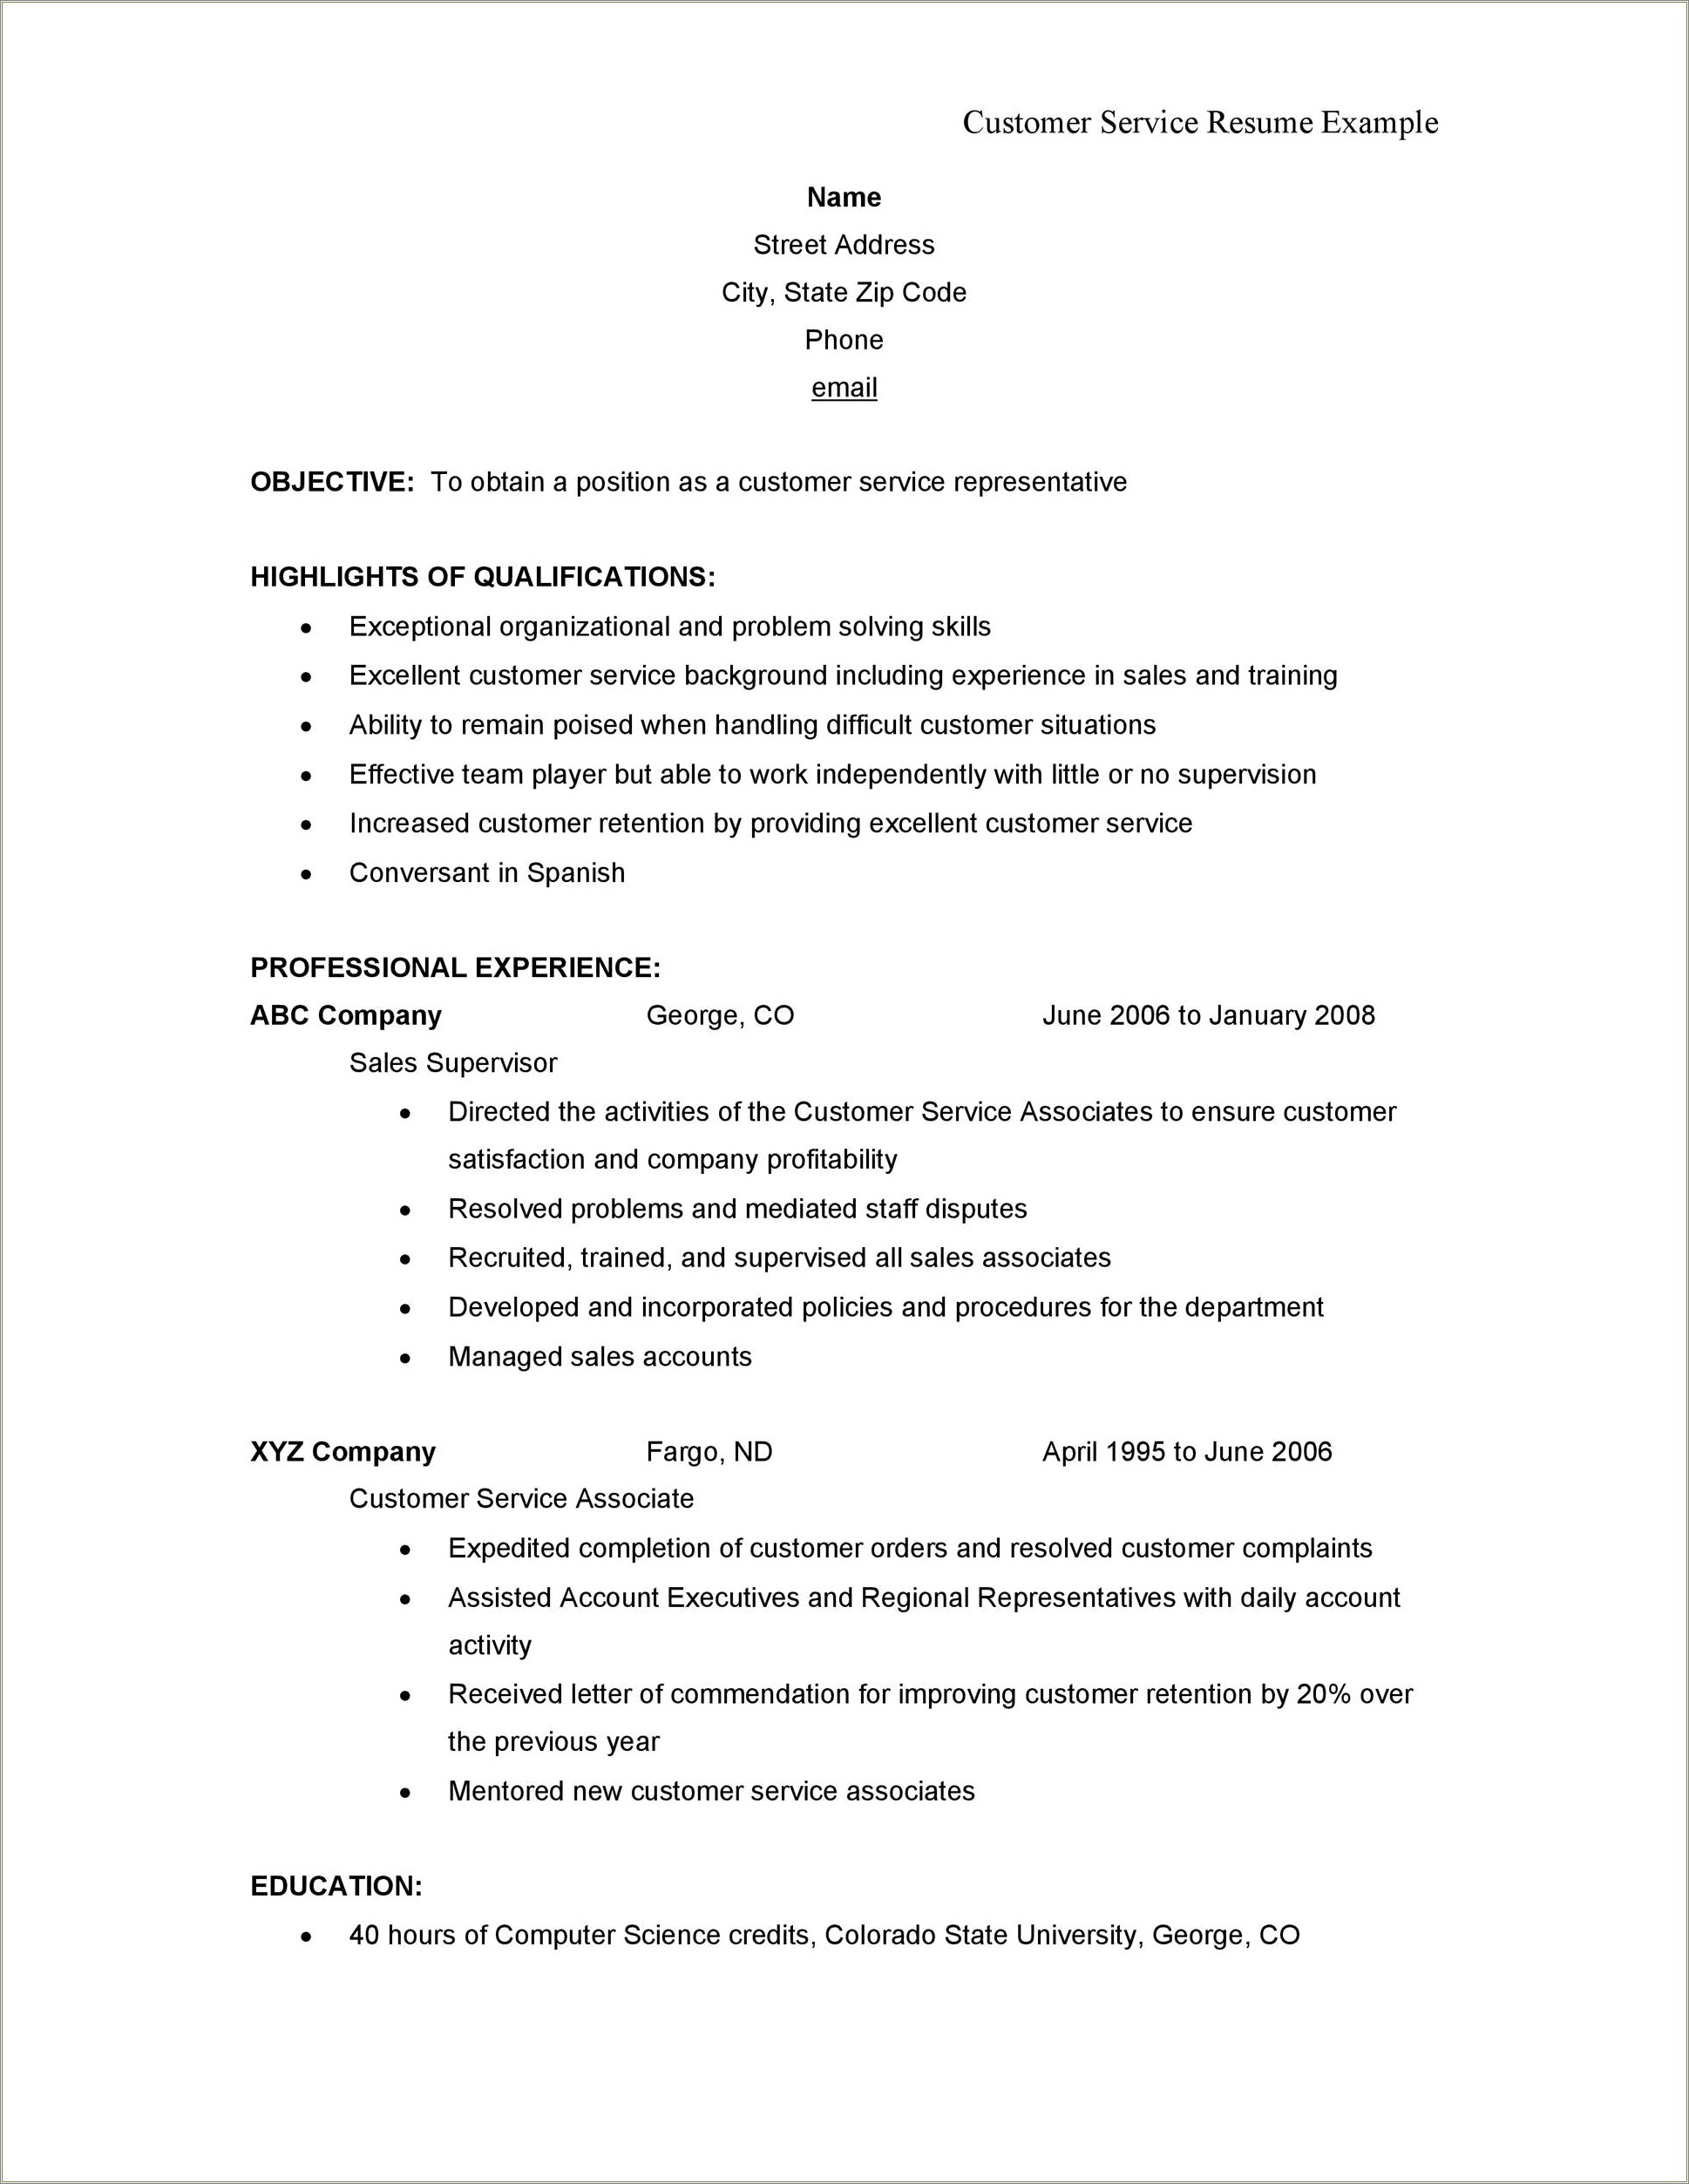 Sample Resume For Customer Service Representative No Experience